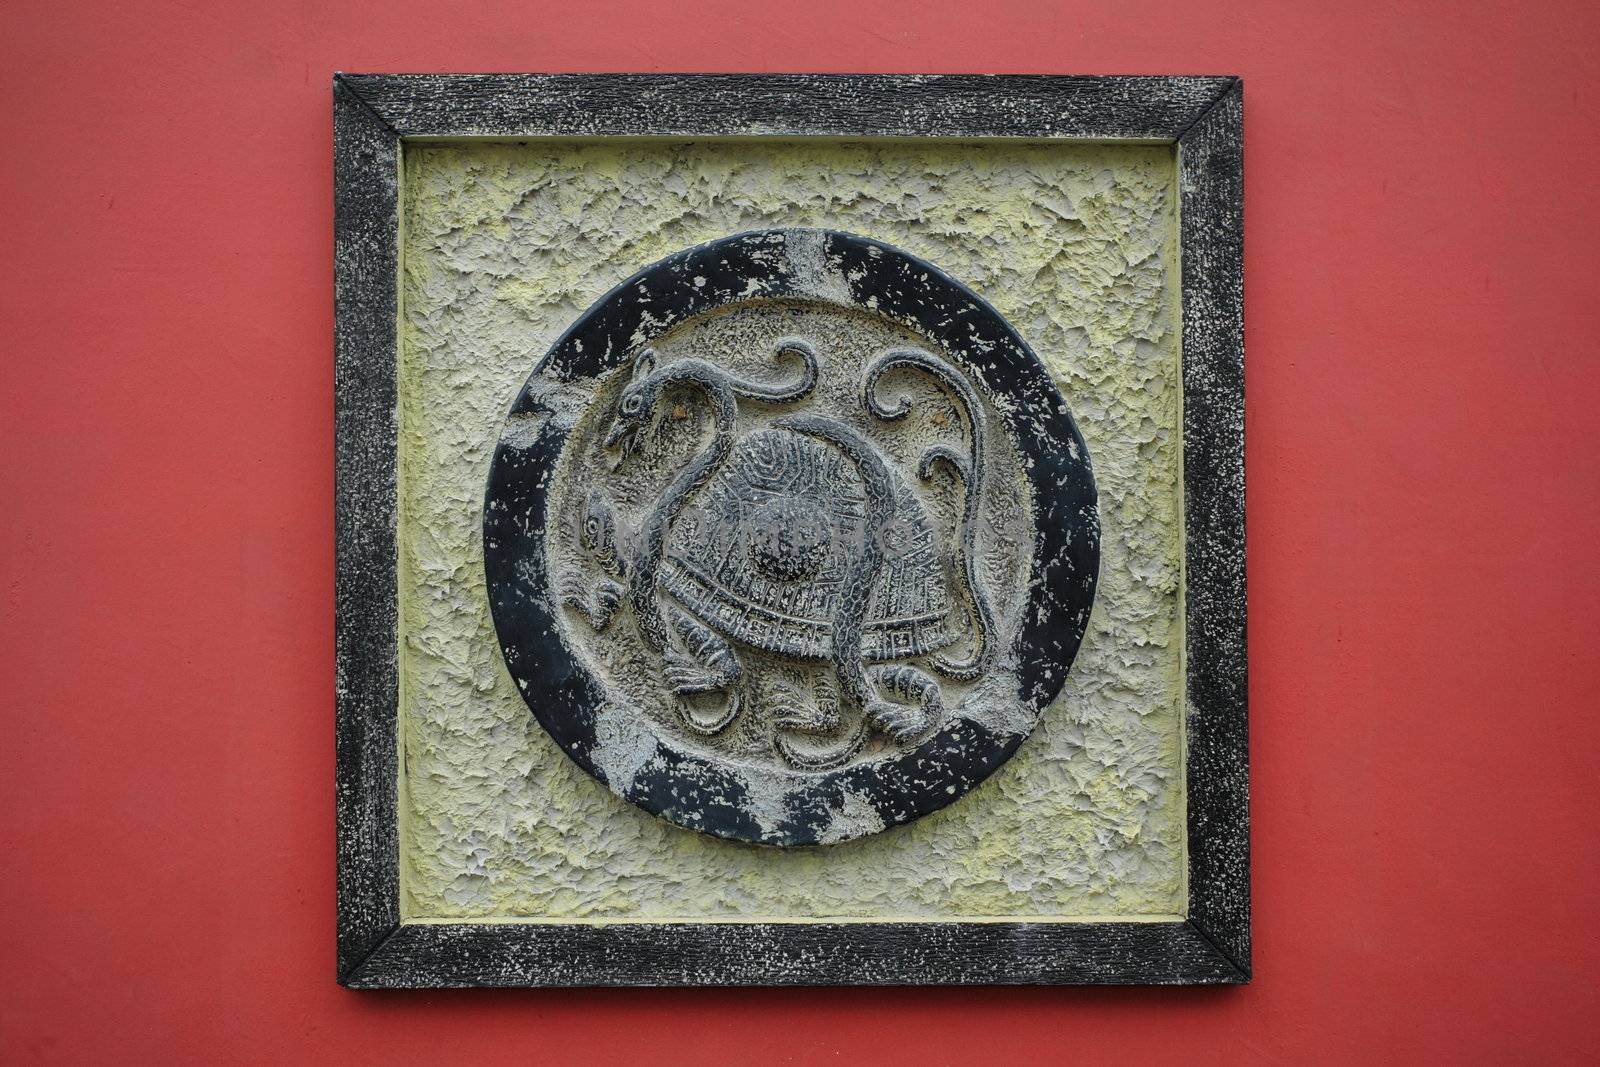 bronze "Black Tortoise" sculpture on a red wall by leungchopan